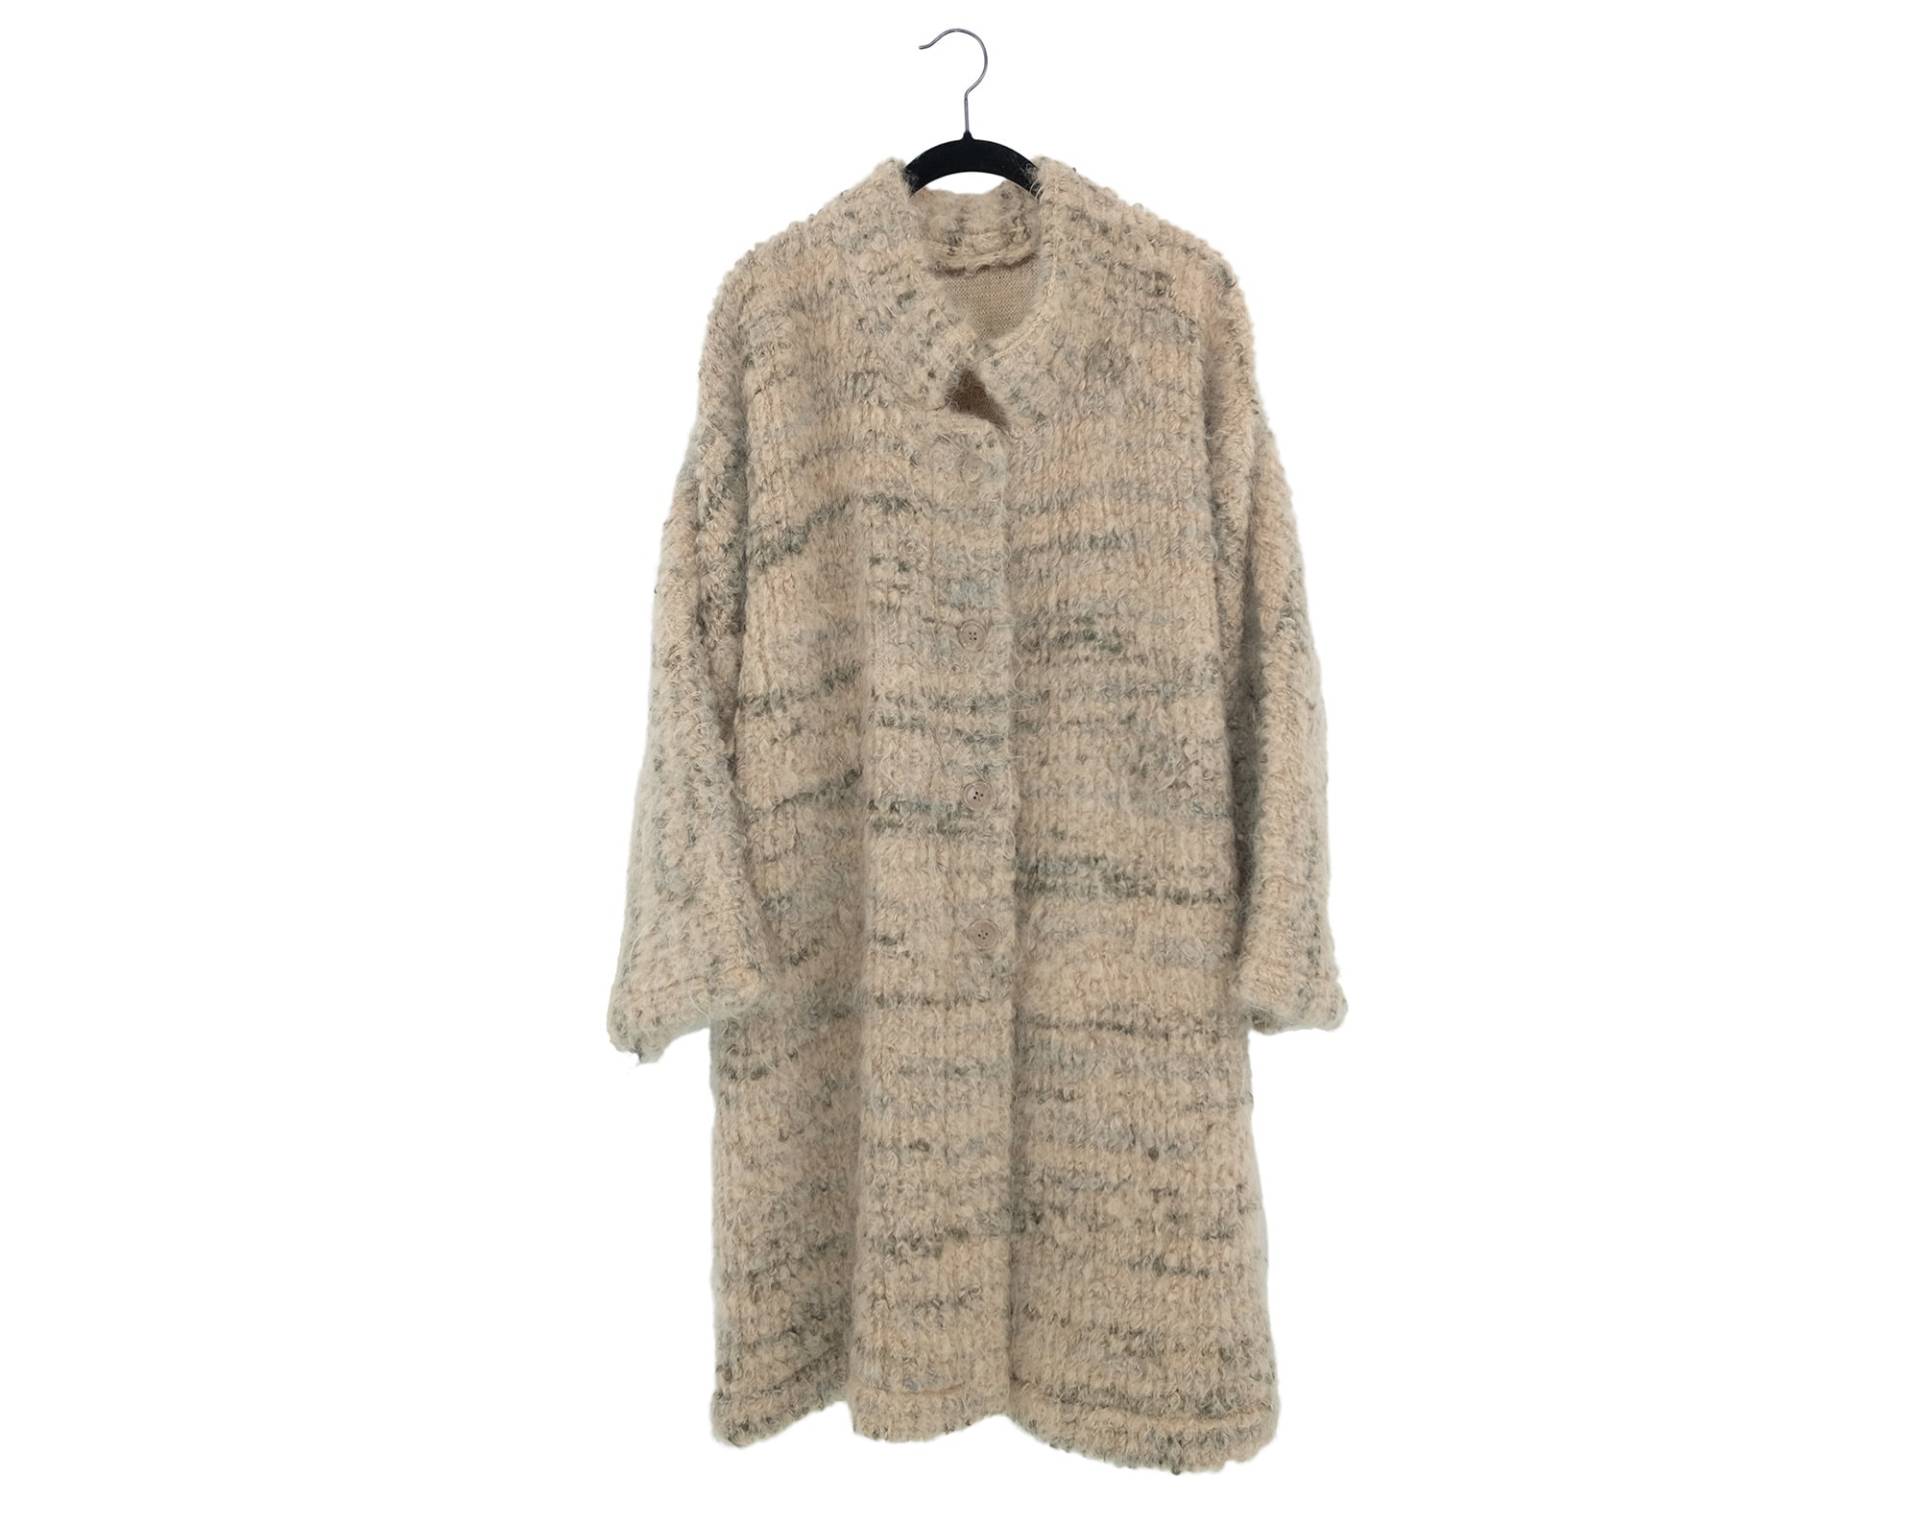 Vintage 70Er Jahre Fuzzy Soft Wolle Oversize Tan & Grau Mantel Winterjacke, Made in Italy von anystore